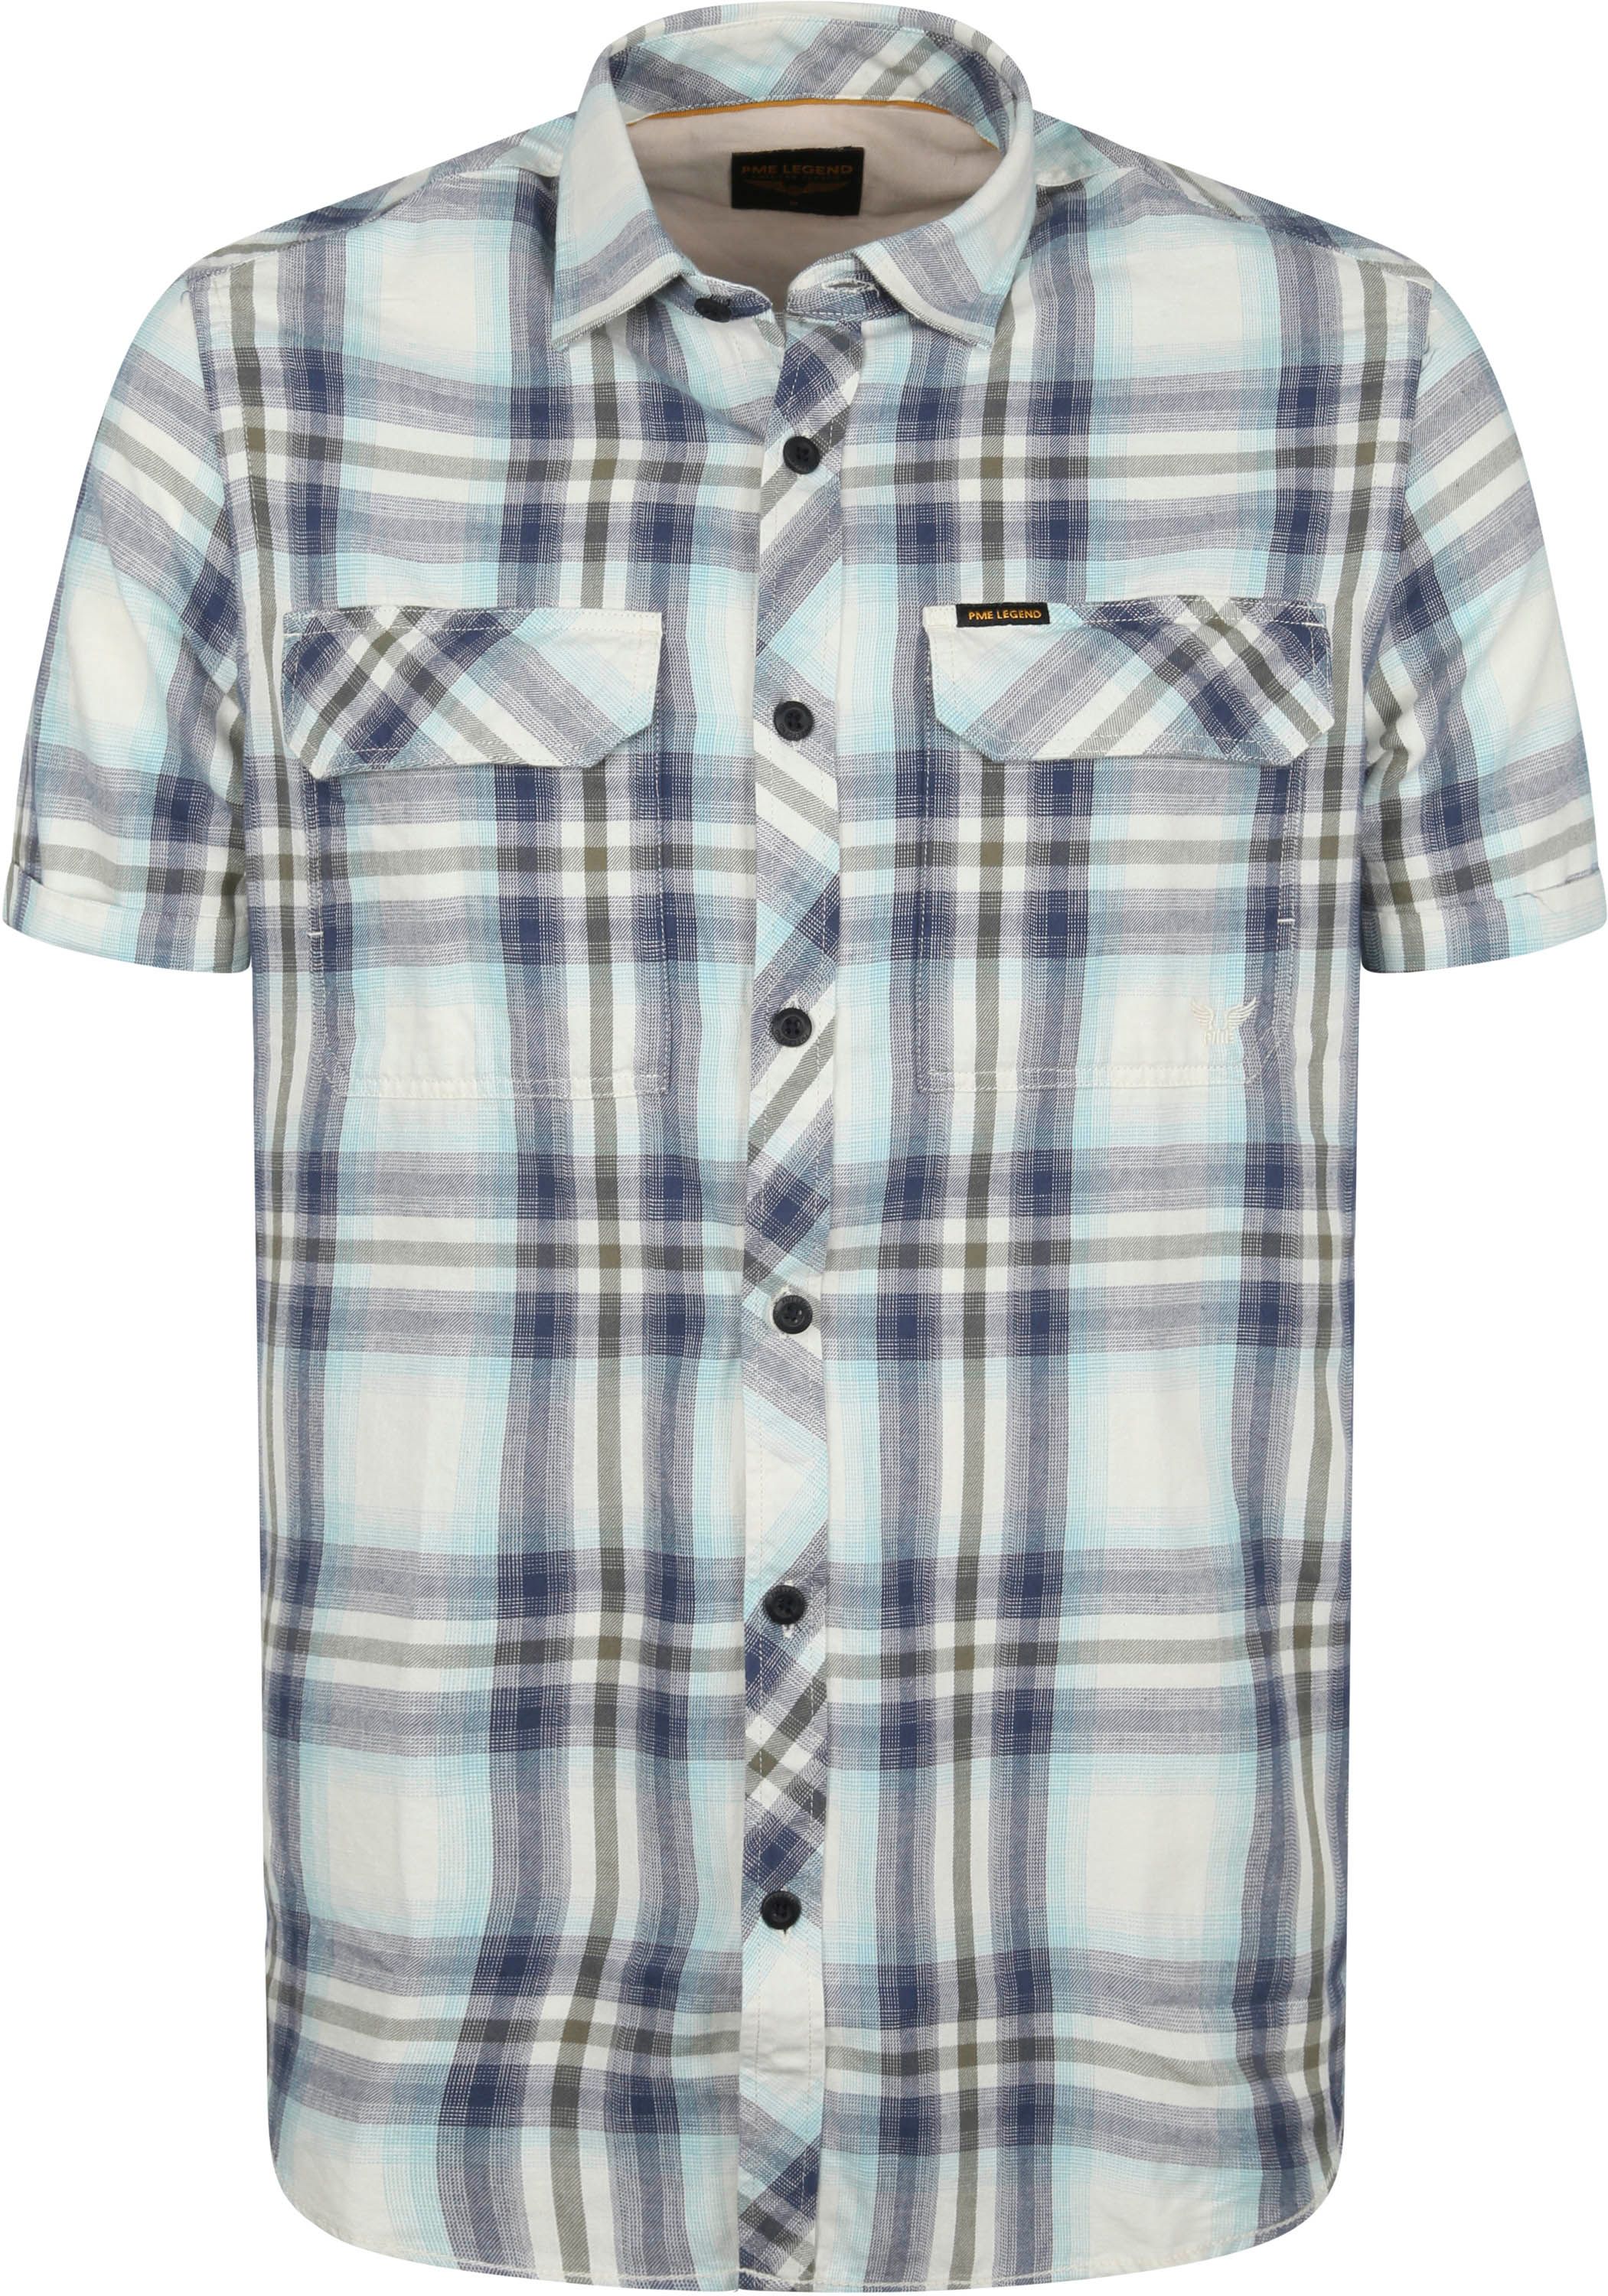 PME Legend Shirt Check Checkered Multicolour Blue size 3XL